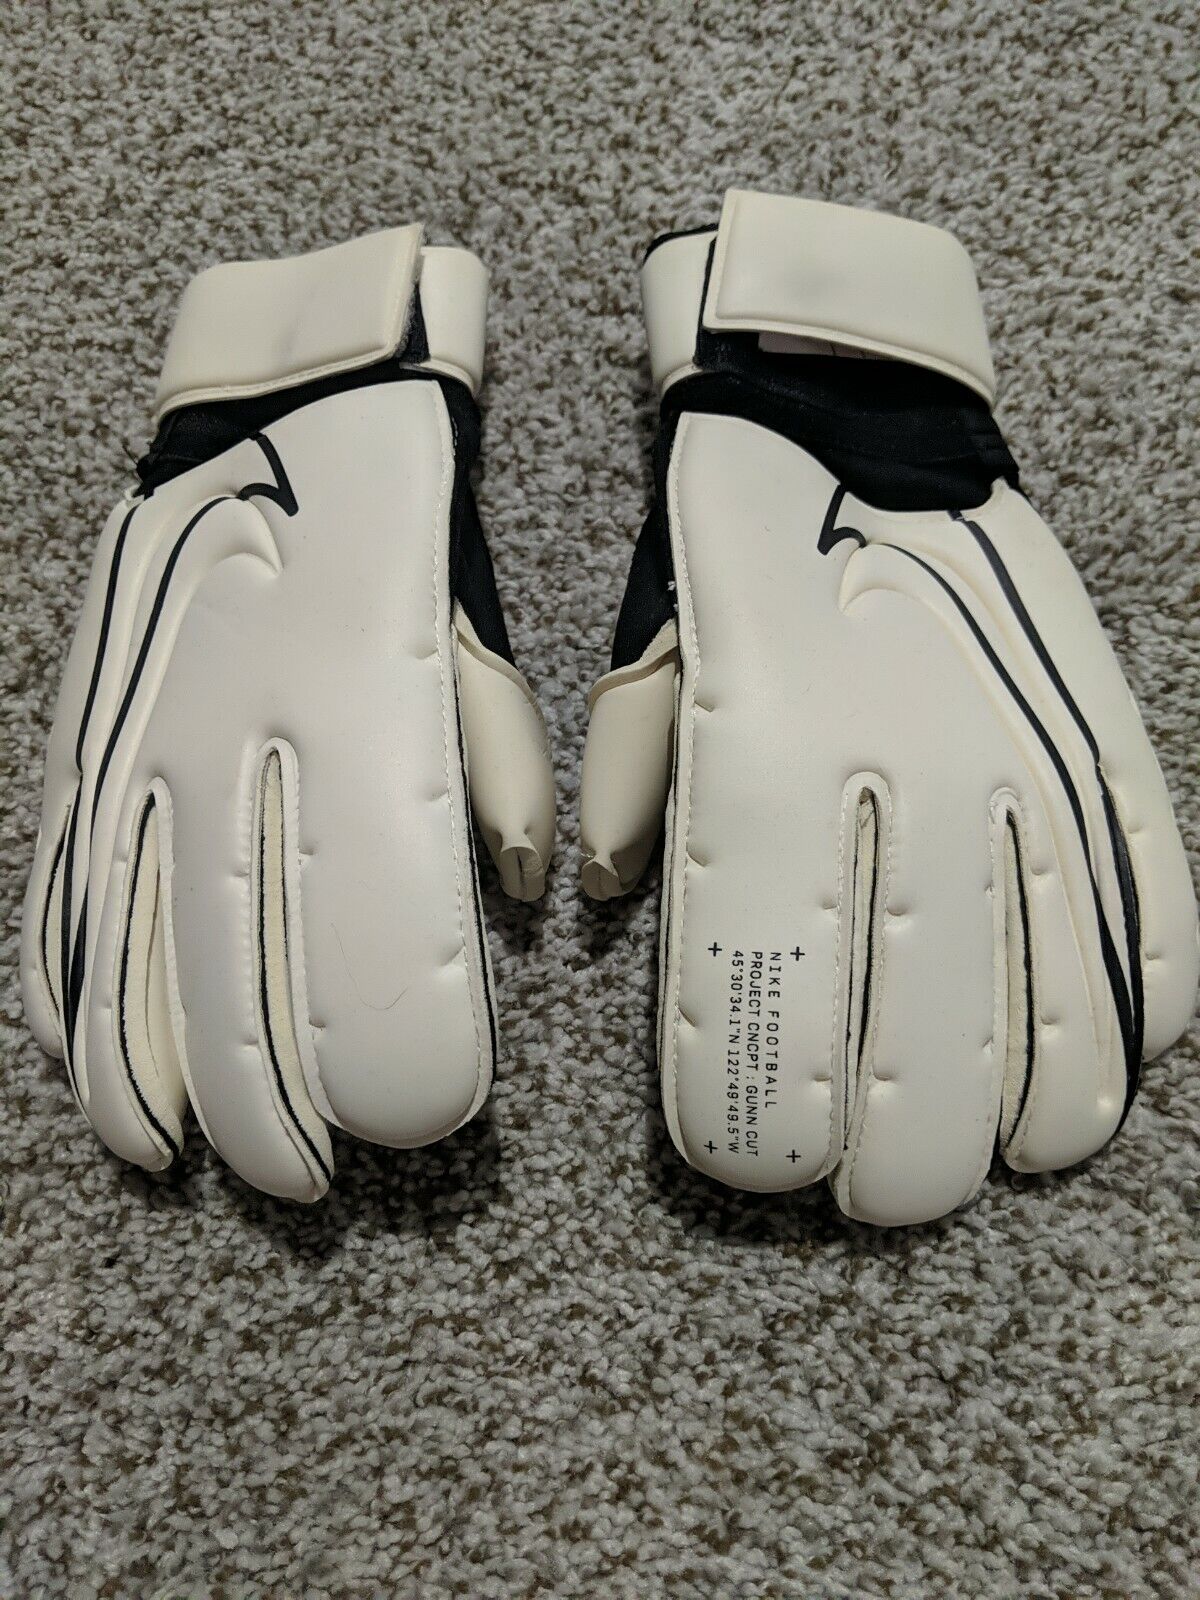 Nike GK Gunn Cut Promo Goalkeeper Gloves Size 9.5 CK4899-100